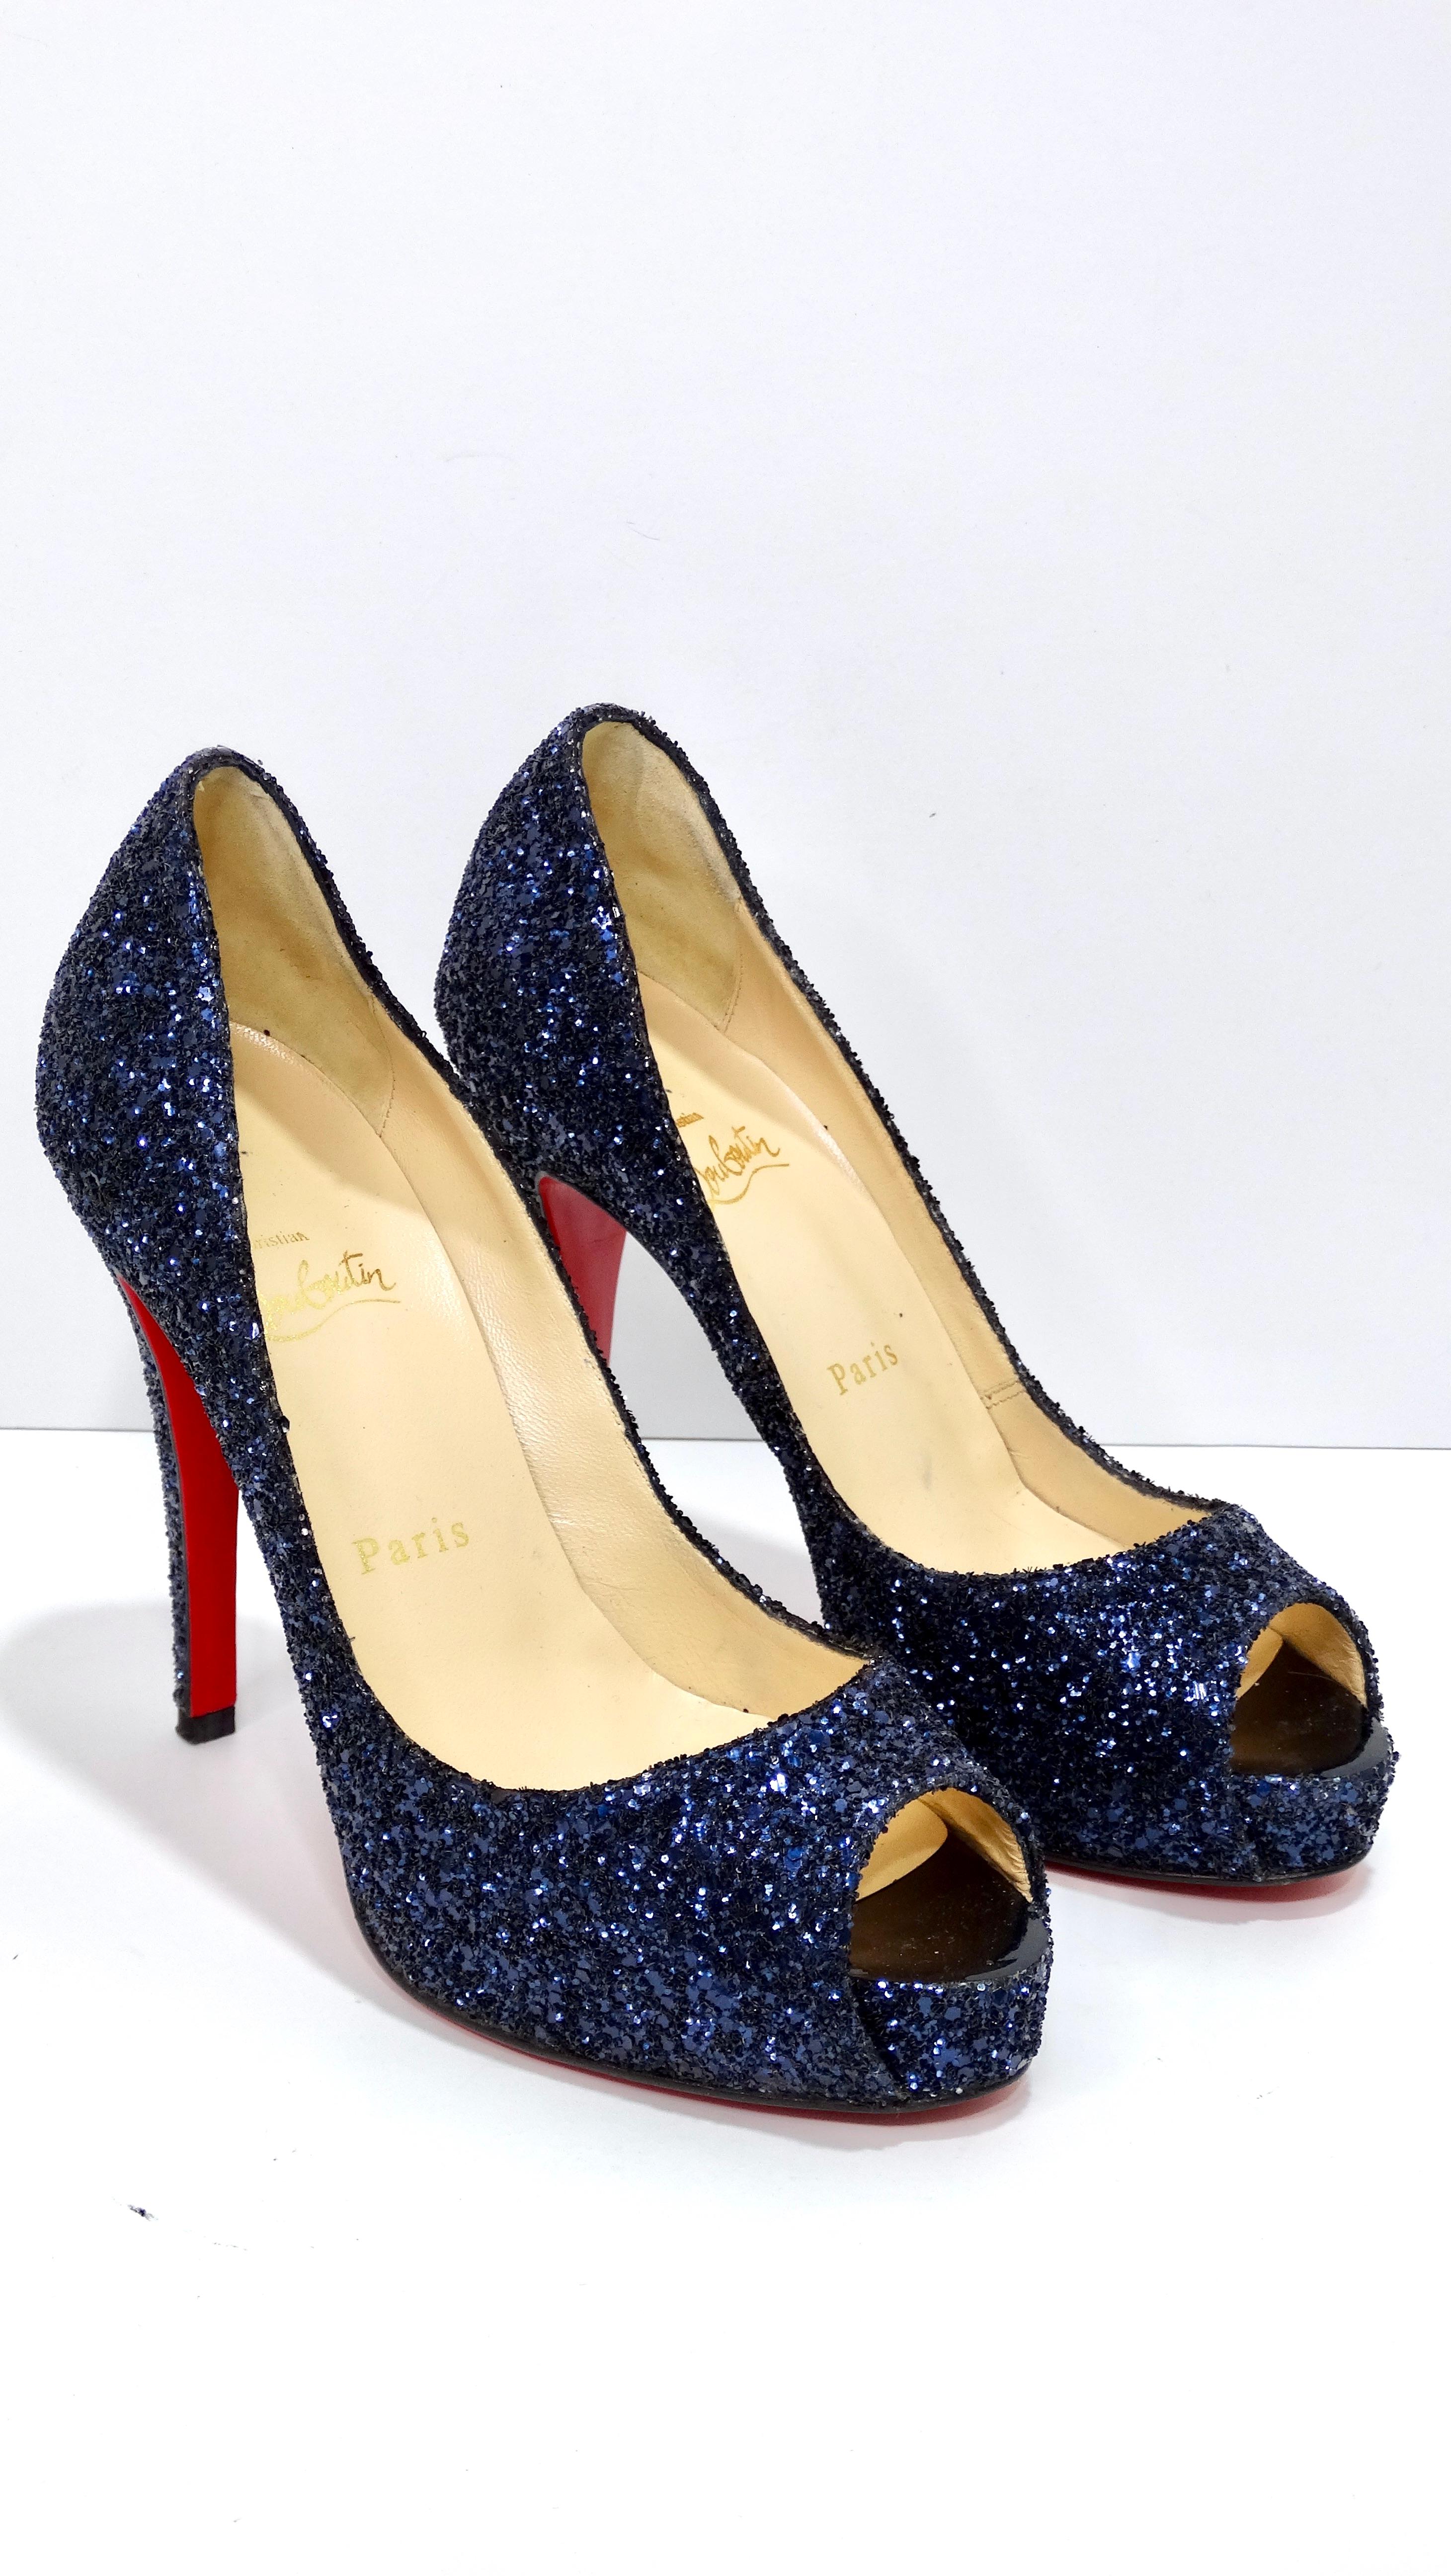 DUNE Womens Shoes Size 39Eur Blue Rhinestone Fabric Heels Pumps | eBay